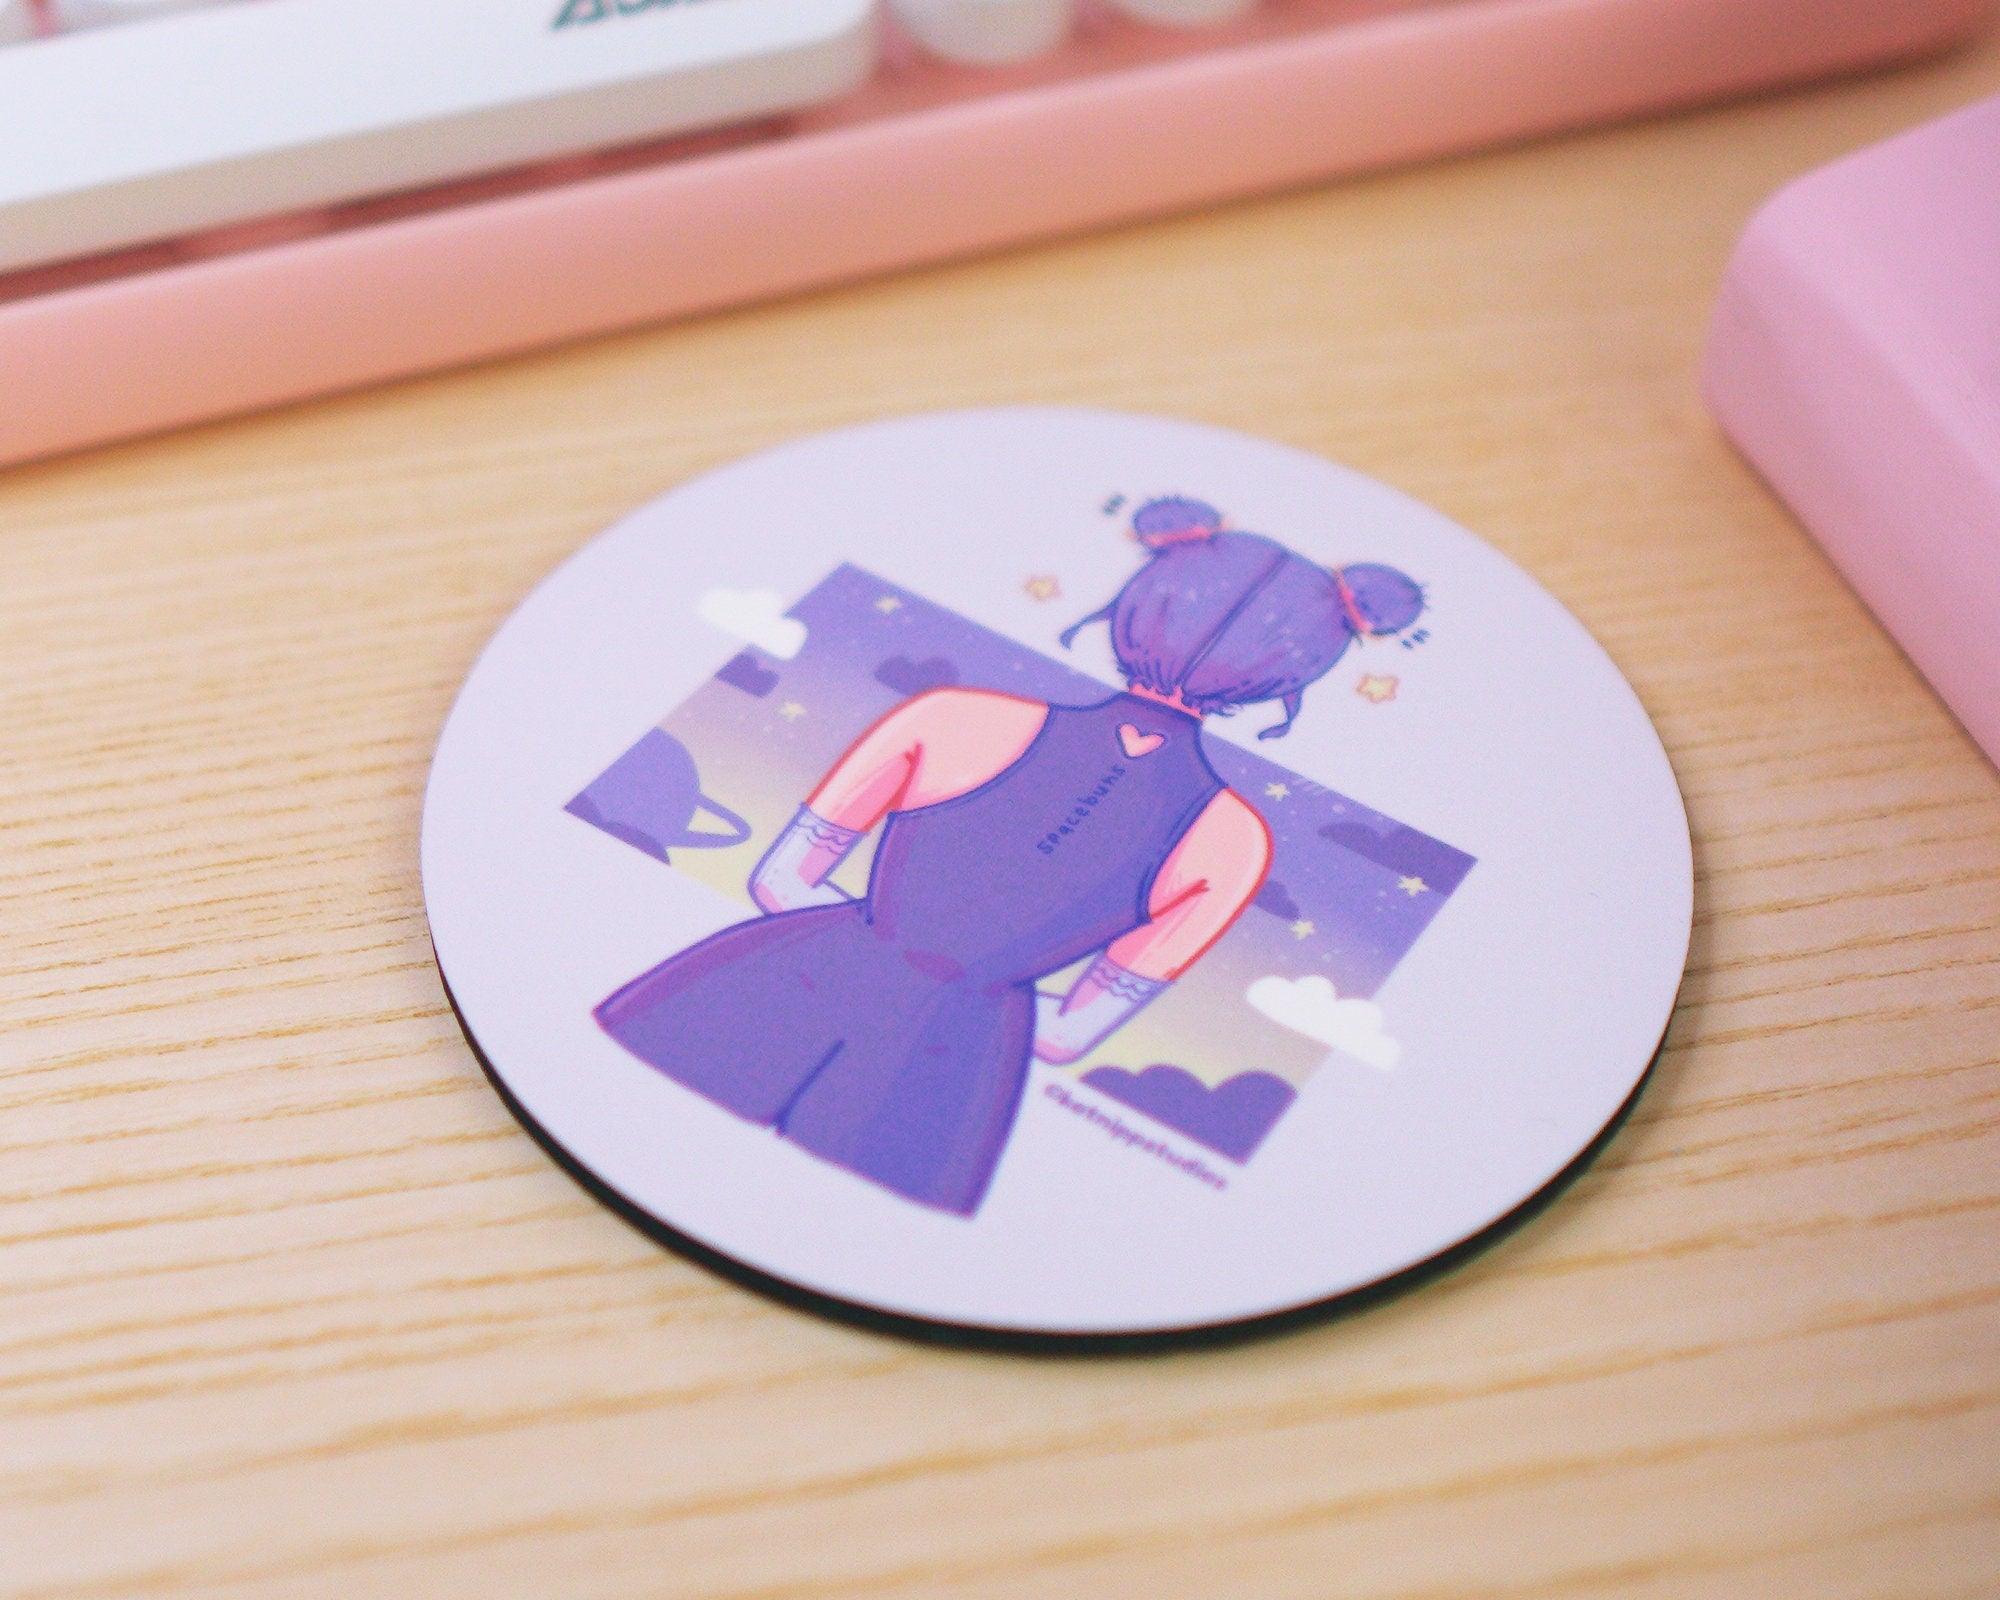 Space Buns Kawaii Anime Girl Desk Accessory Drinks Coaster - Katnipp Illustrations